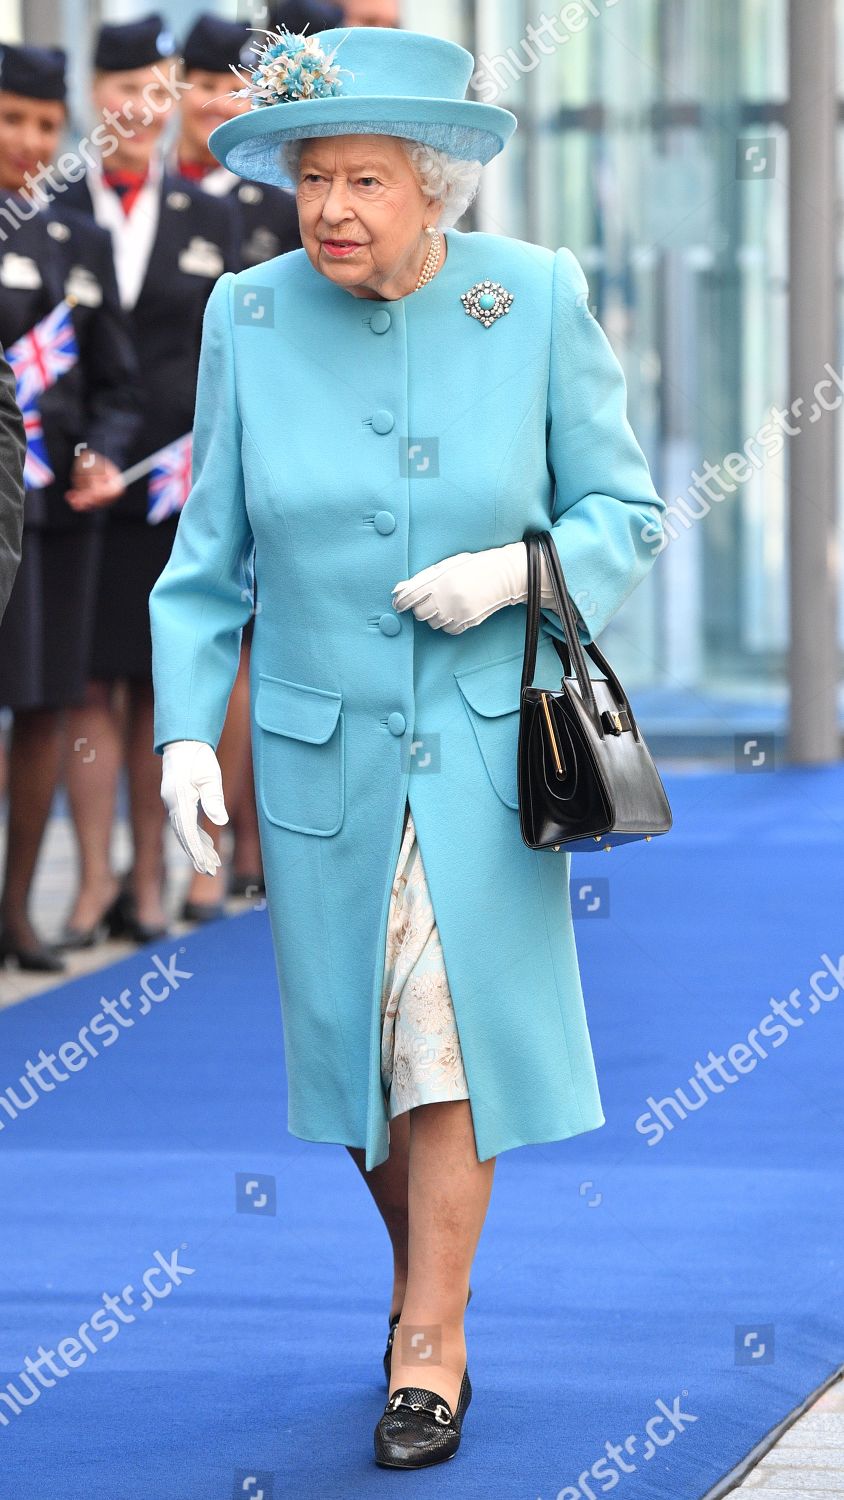 queen-elizabeth-ii-visits-british-airways-headquarters-at-heathrow-airport-london-uk-shutterstock-editorial-10245463e.jpg